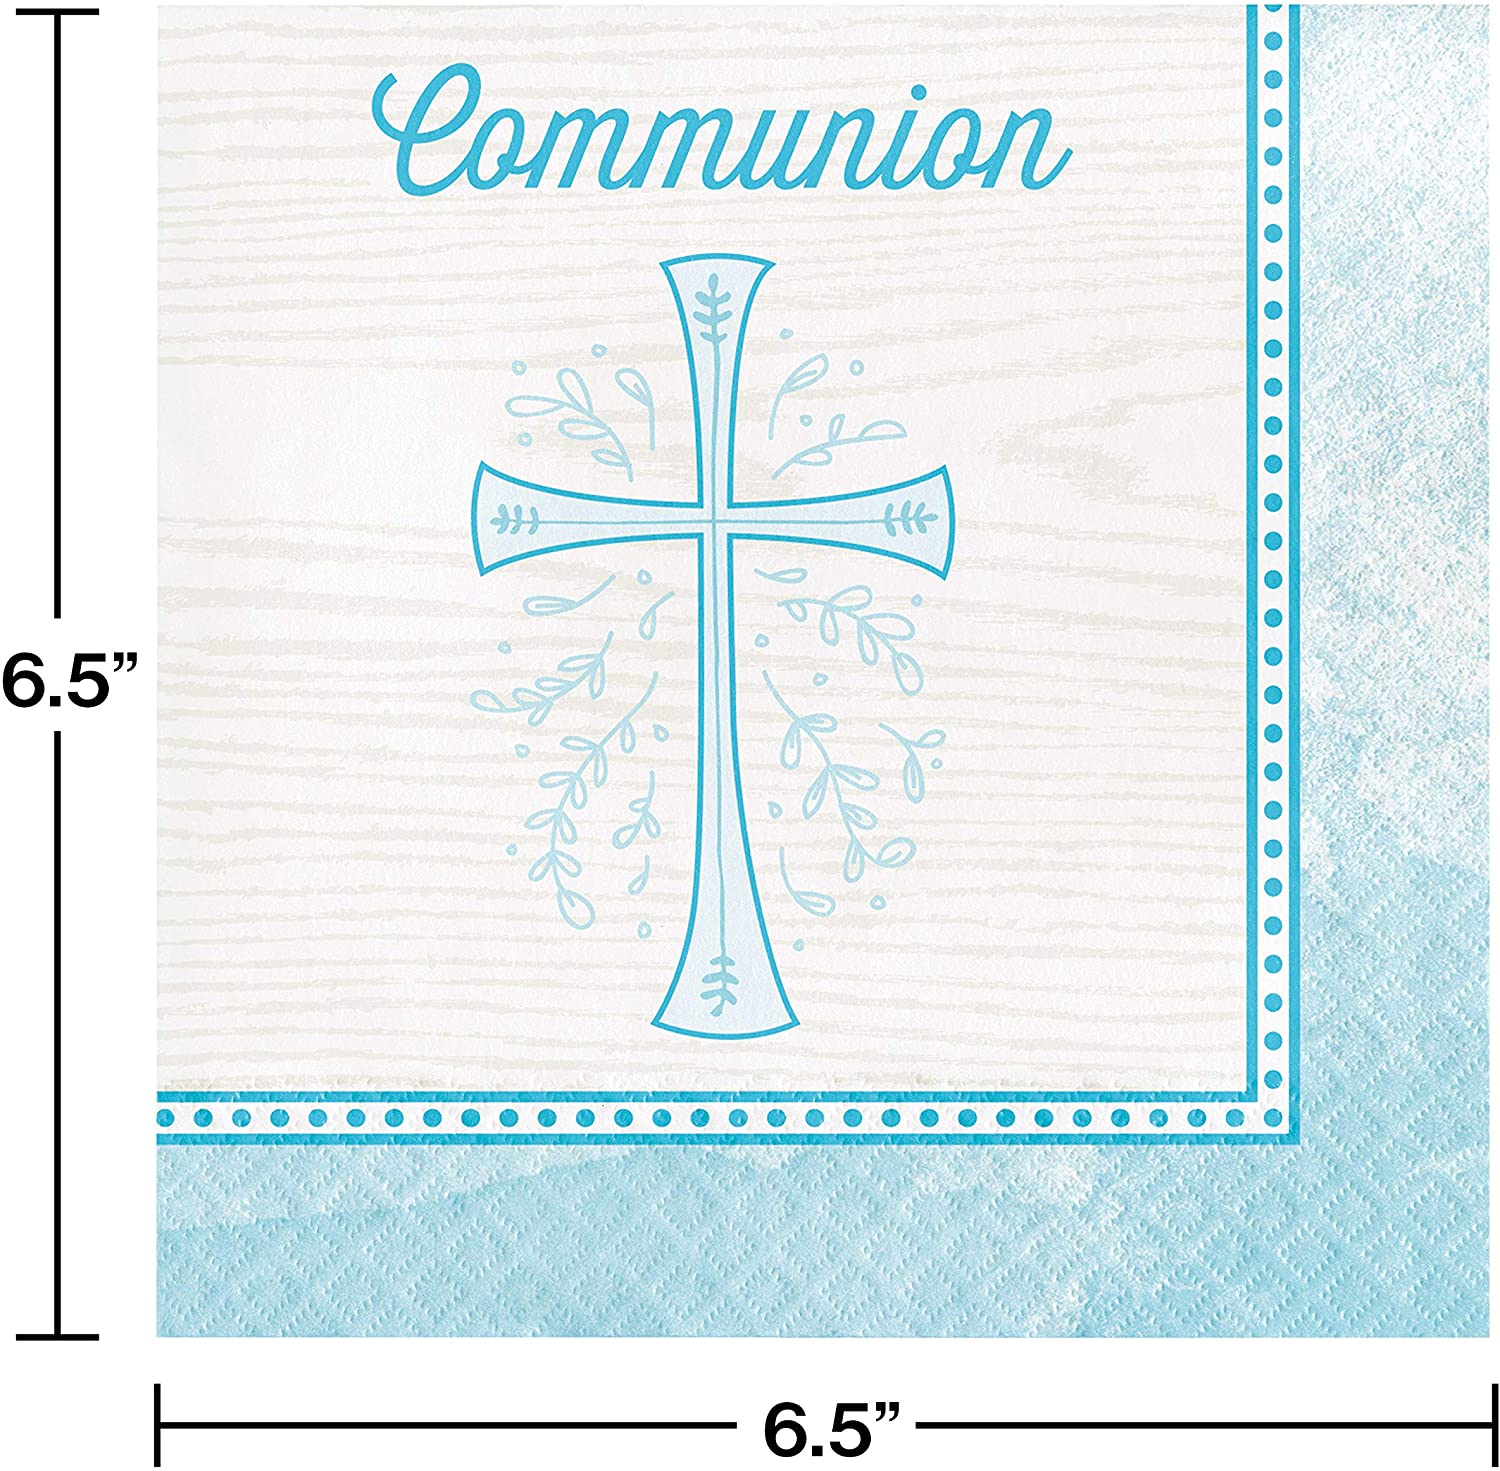 Religious Light Blue Cross Communion Luncheon Paper Disposable Napkins – 16 Count